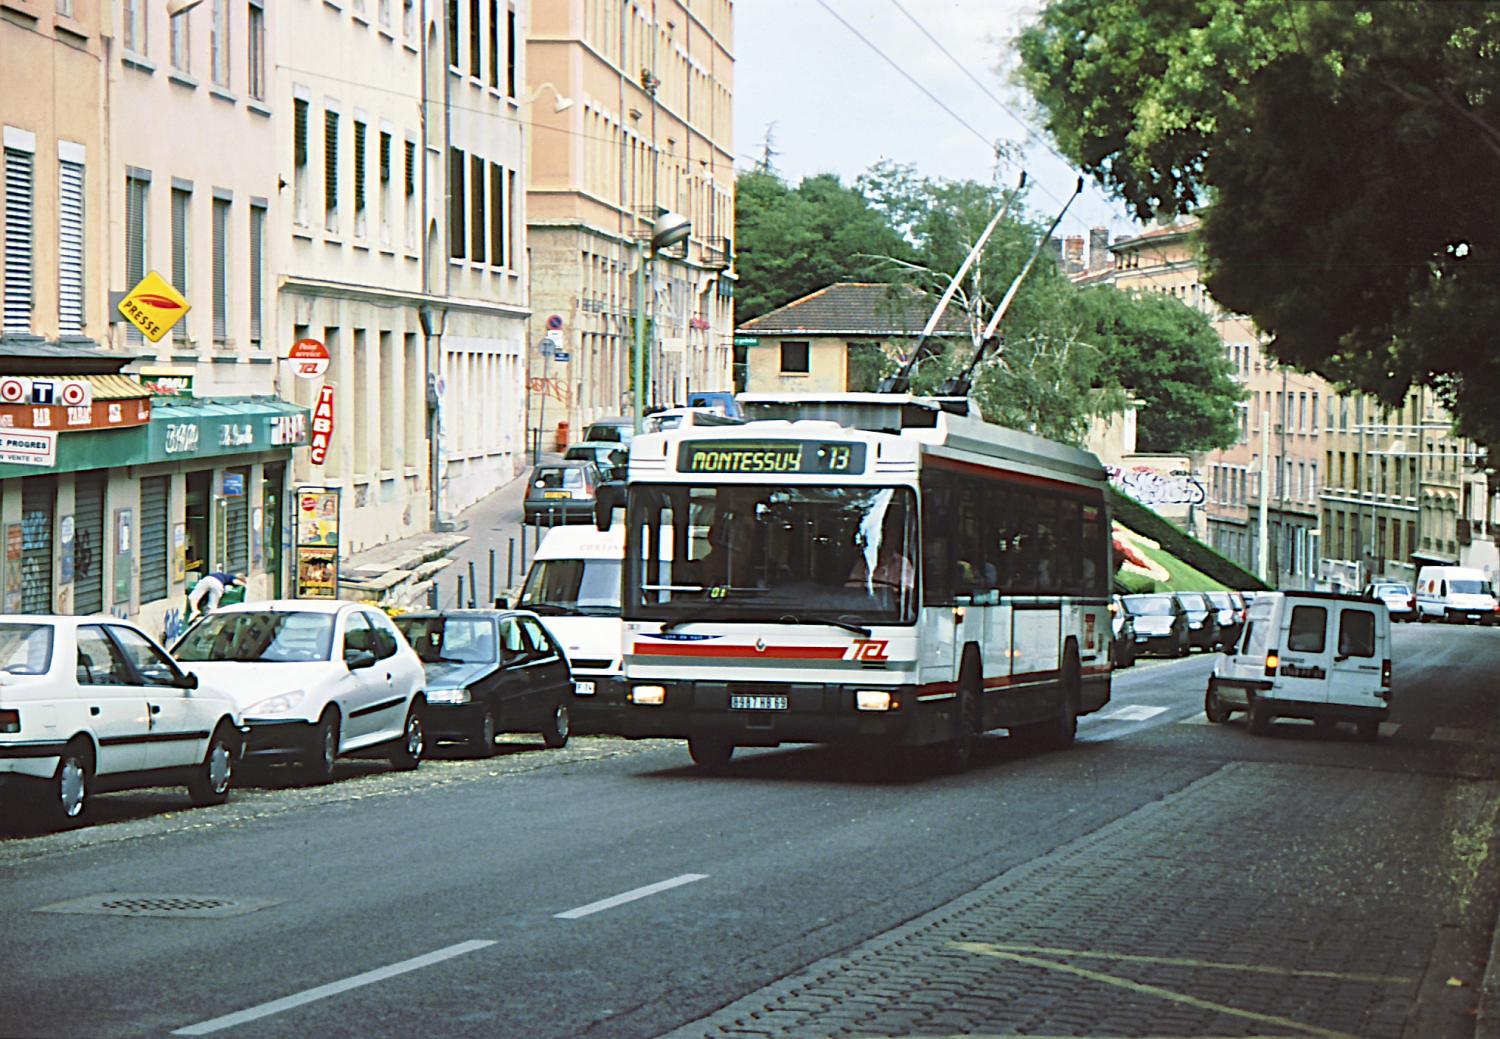 [Trolleybus (ligne 13), place Rouville]